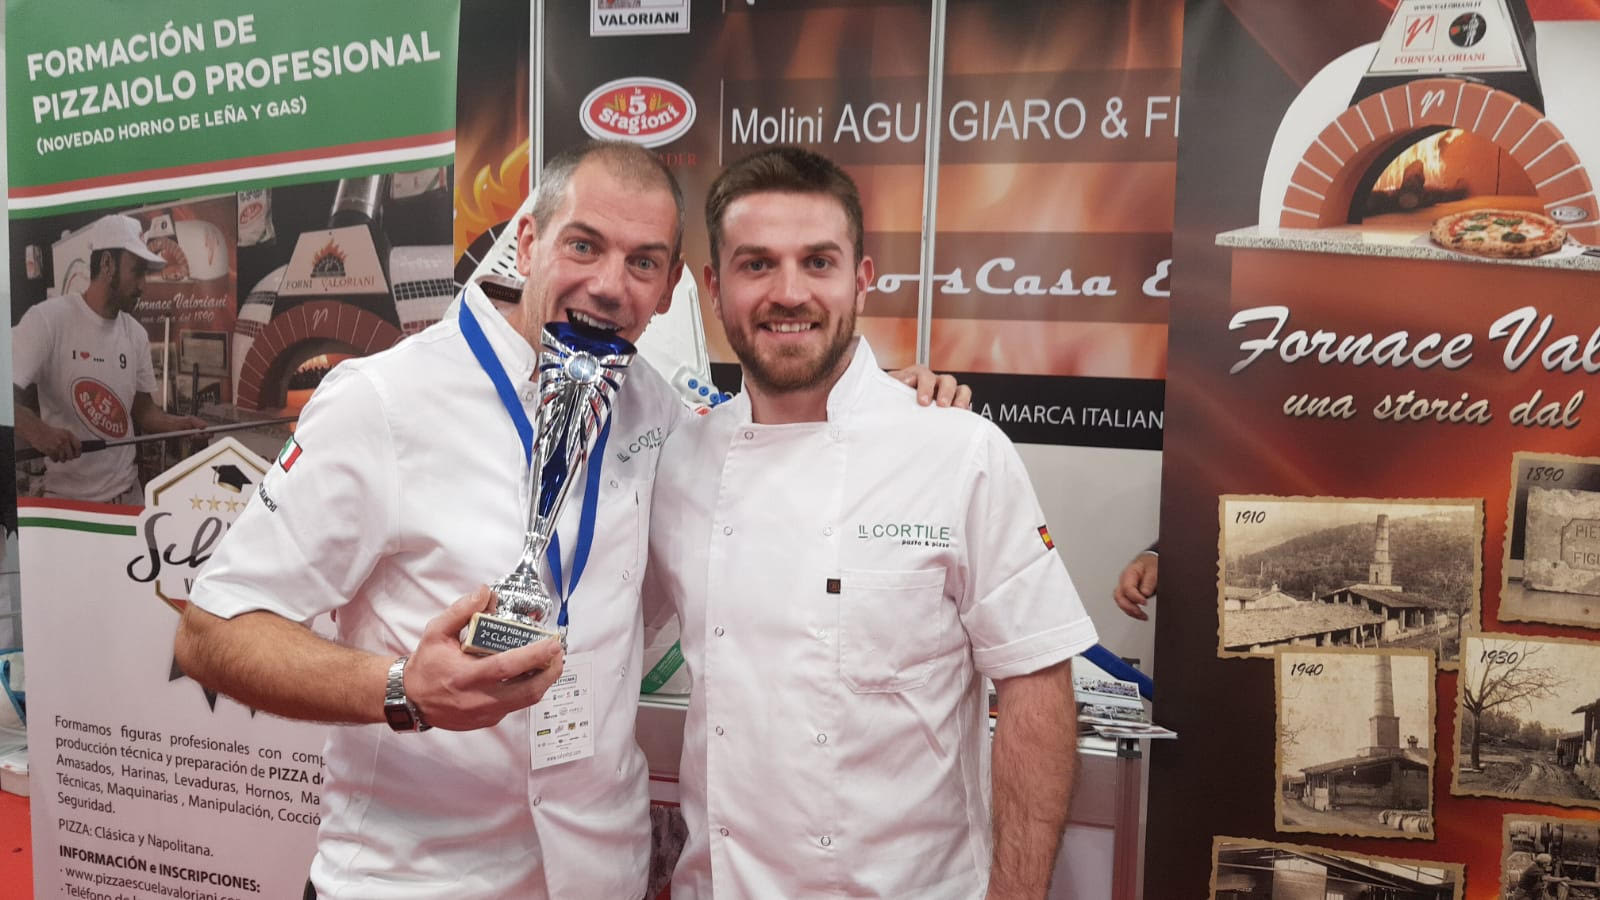 Marco Bianchi y Christian Pierotto responsables de la pizzeria Il Cortile